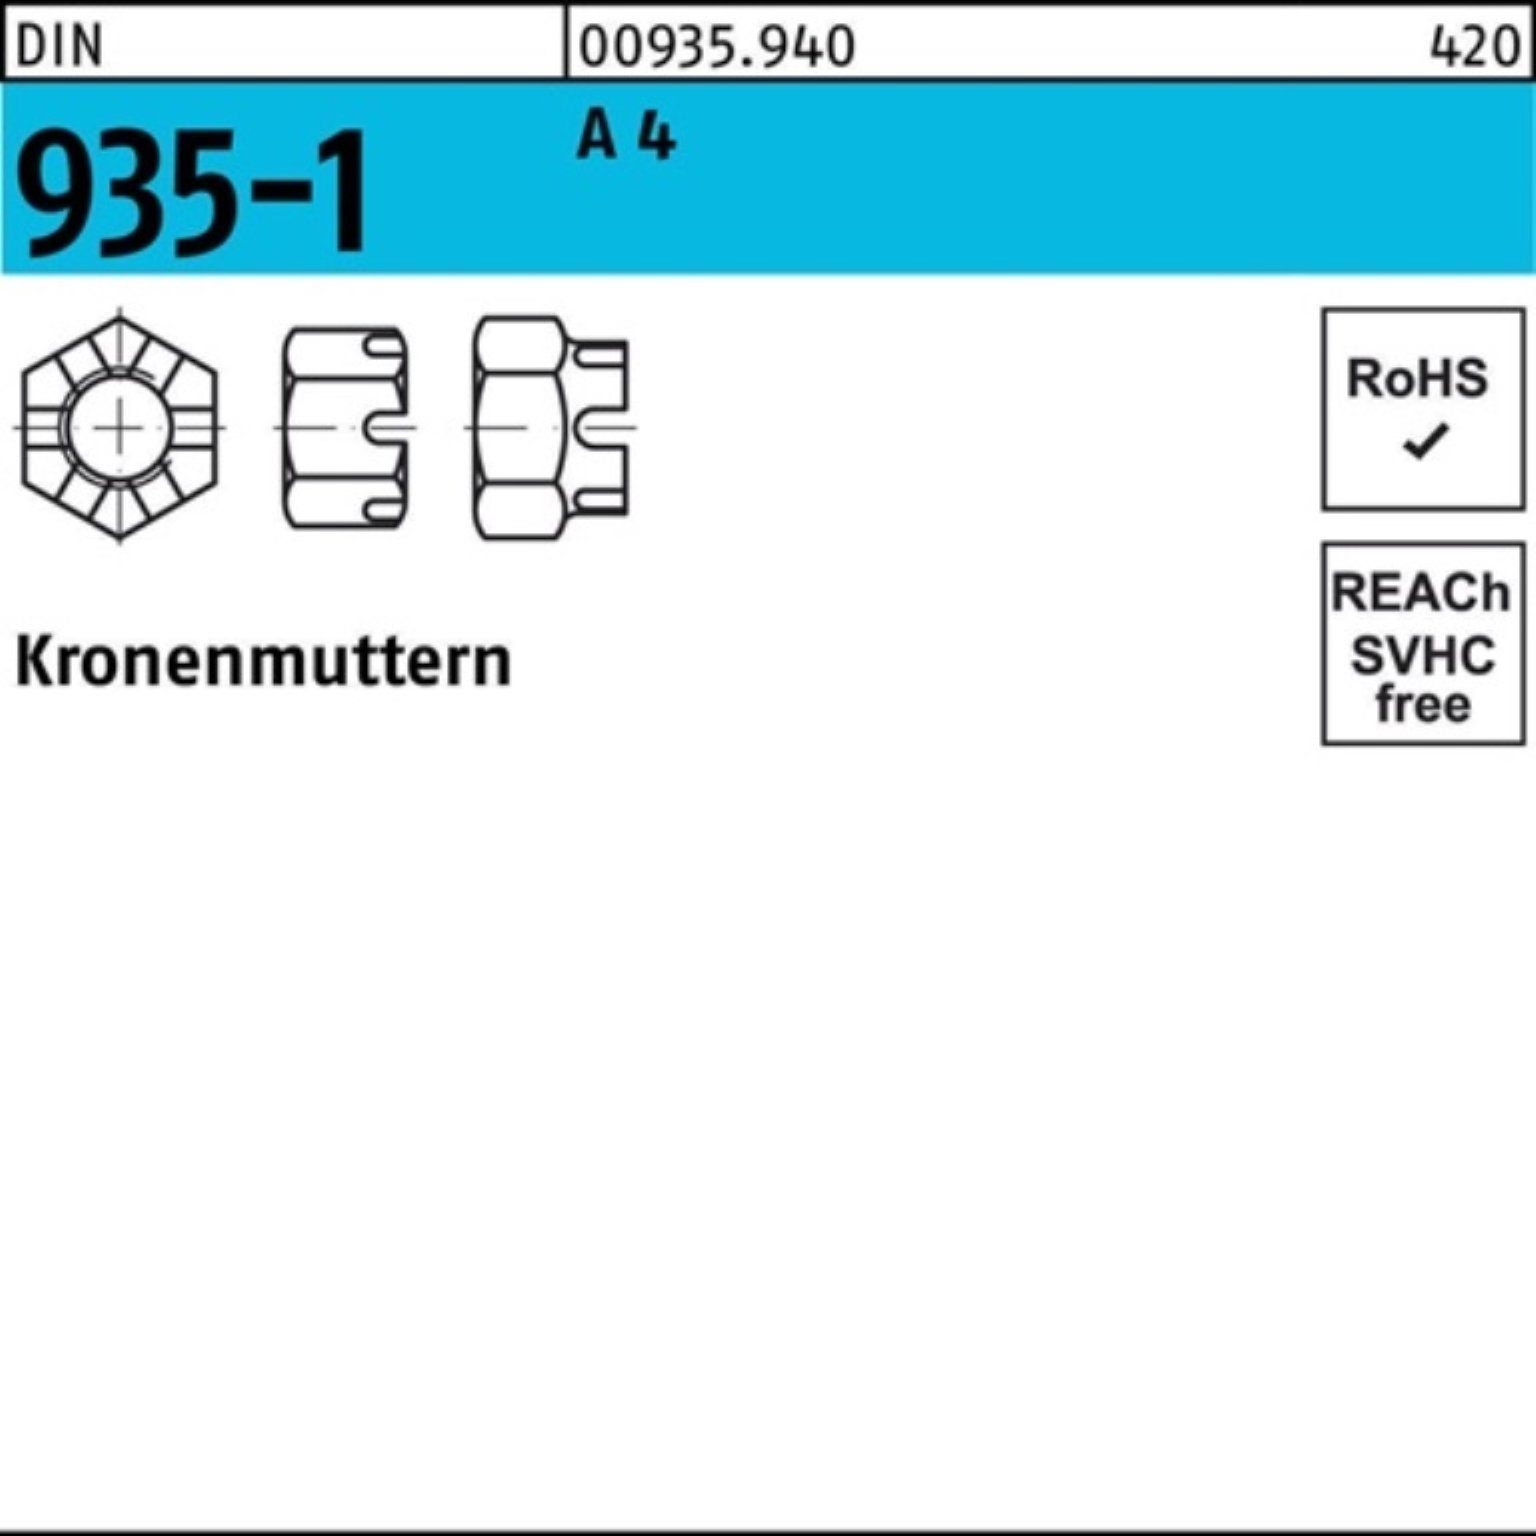 Reyher Kronenmutter 100er Pack Kronenmutter DIN 935-1 M24 A 4 1 Stück DIN 935-1 A 4 Krone